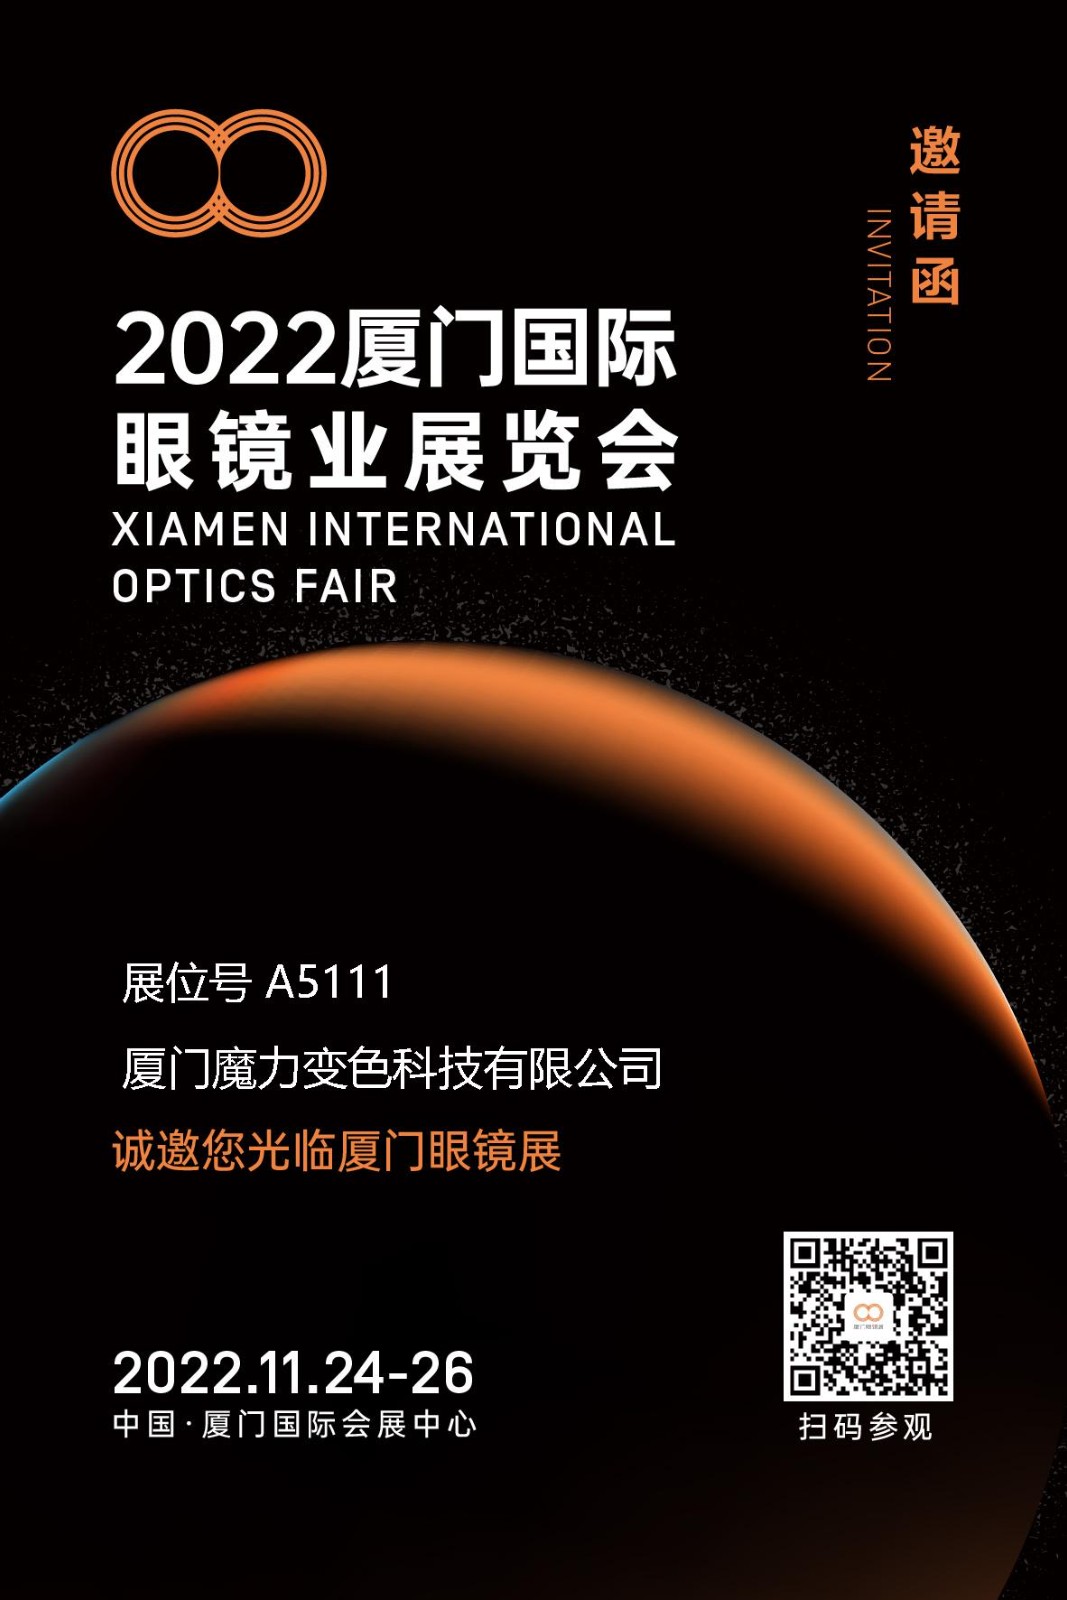 We will be exhibiting at the 2022 Xiamen International Optics Fari